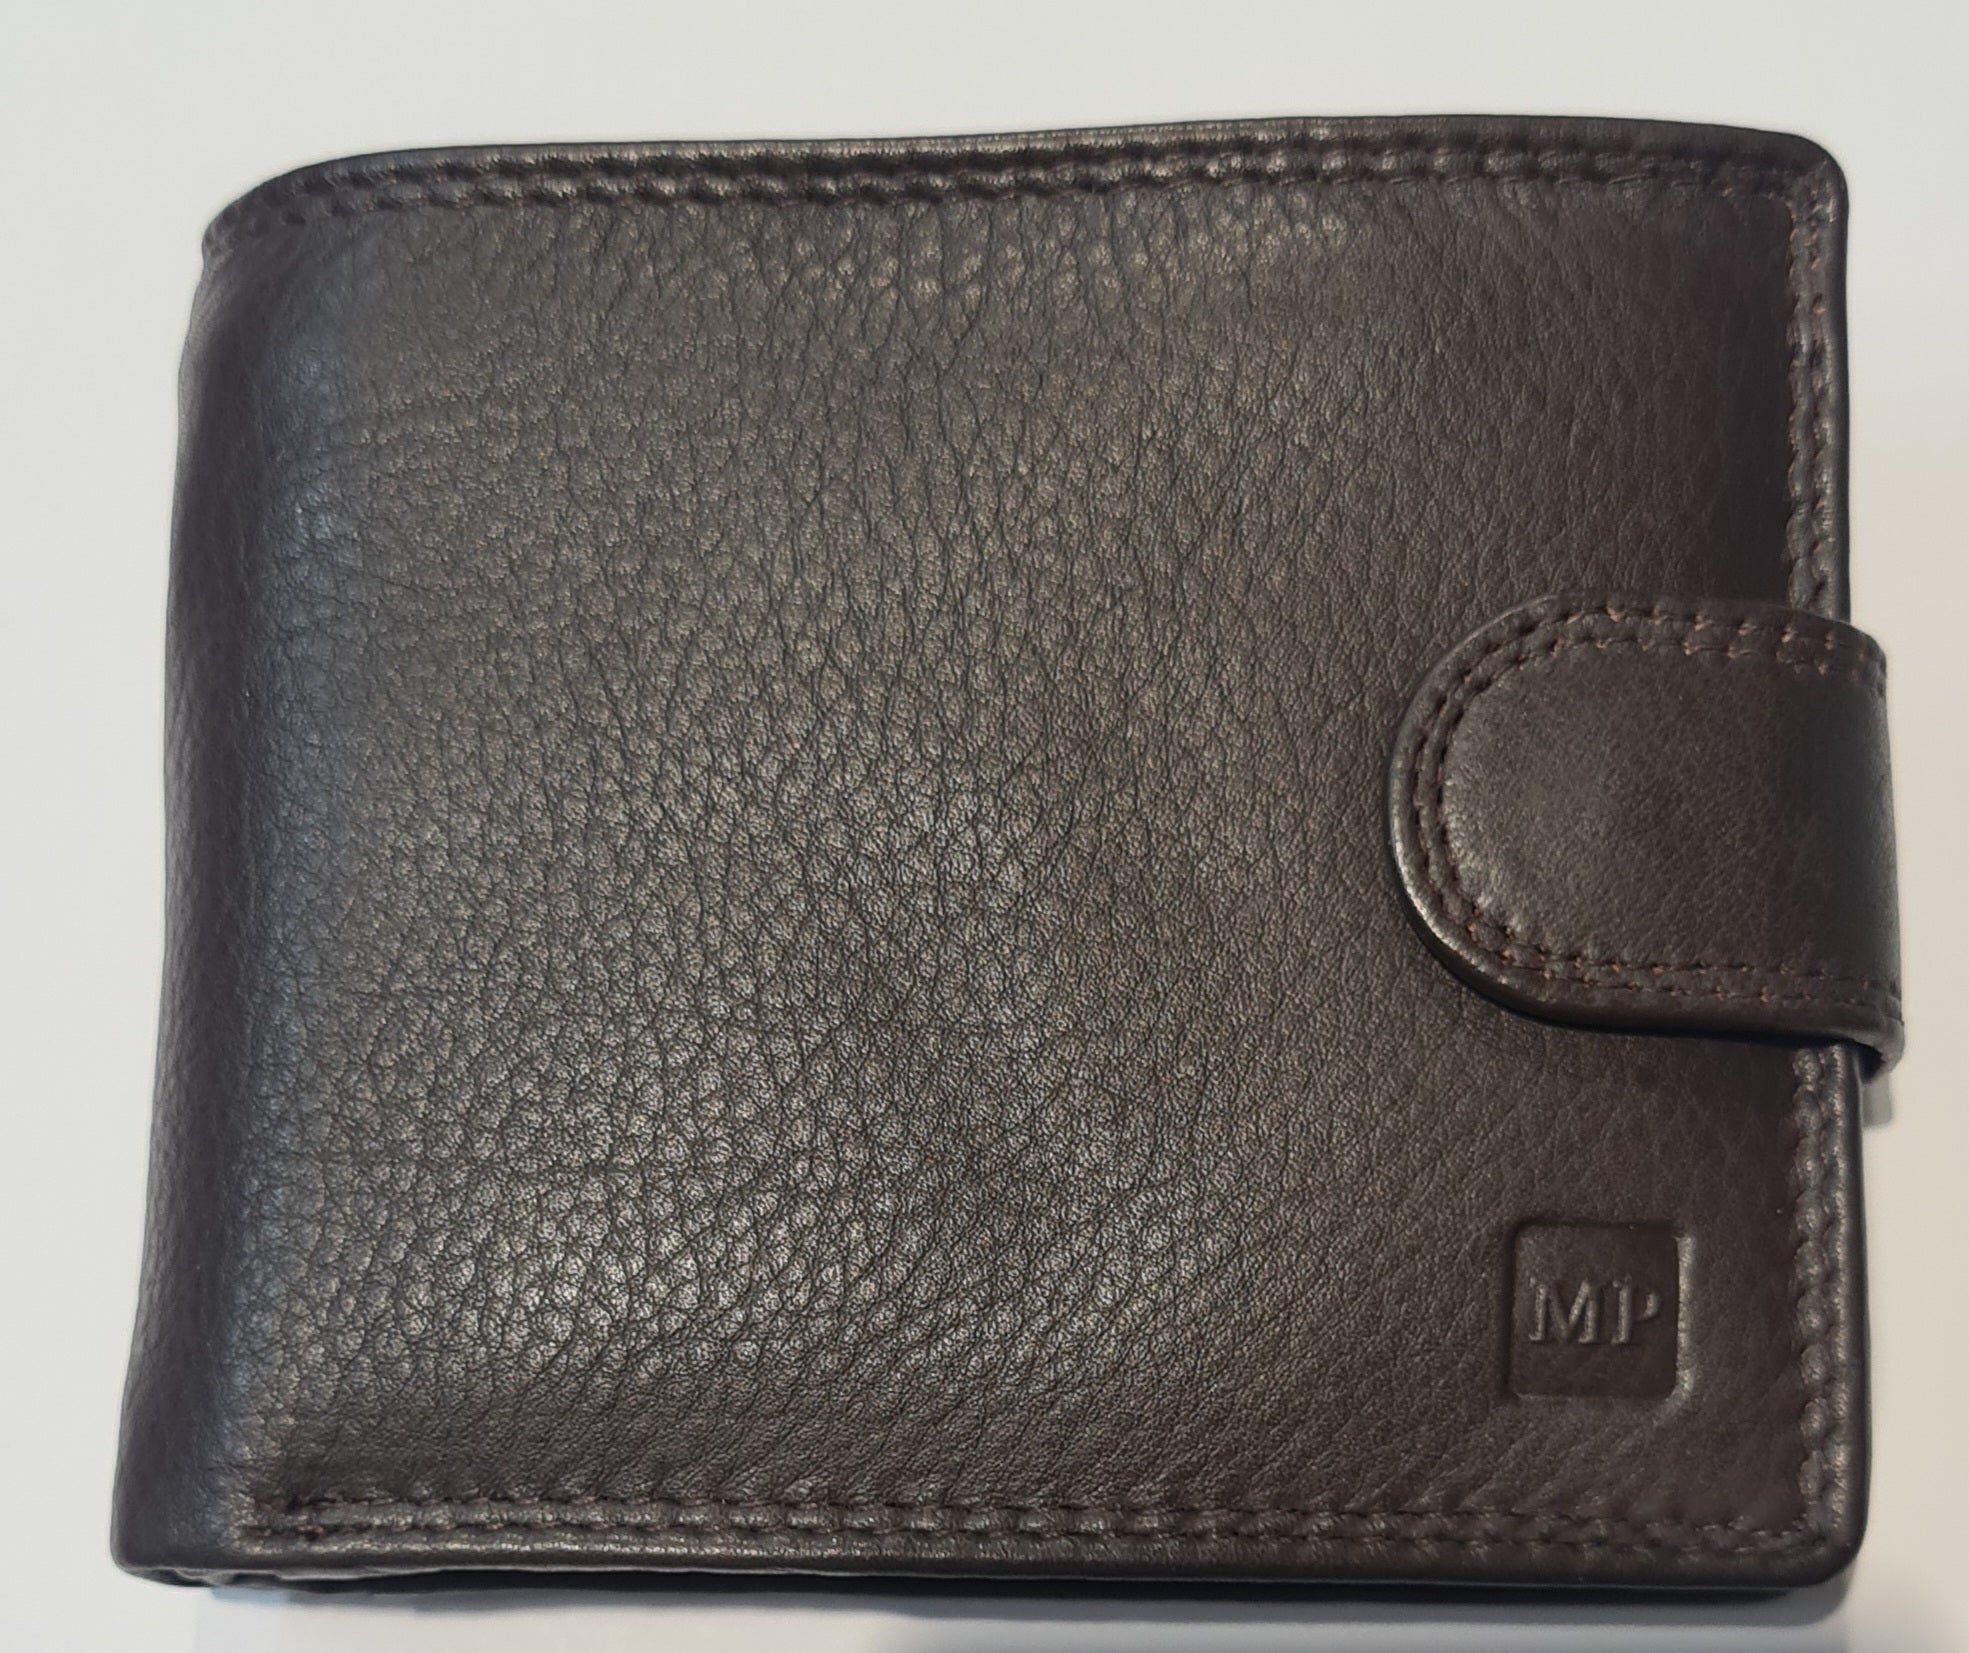 Modapelle Men's Leather Wallet